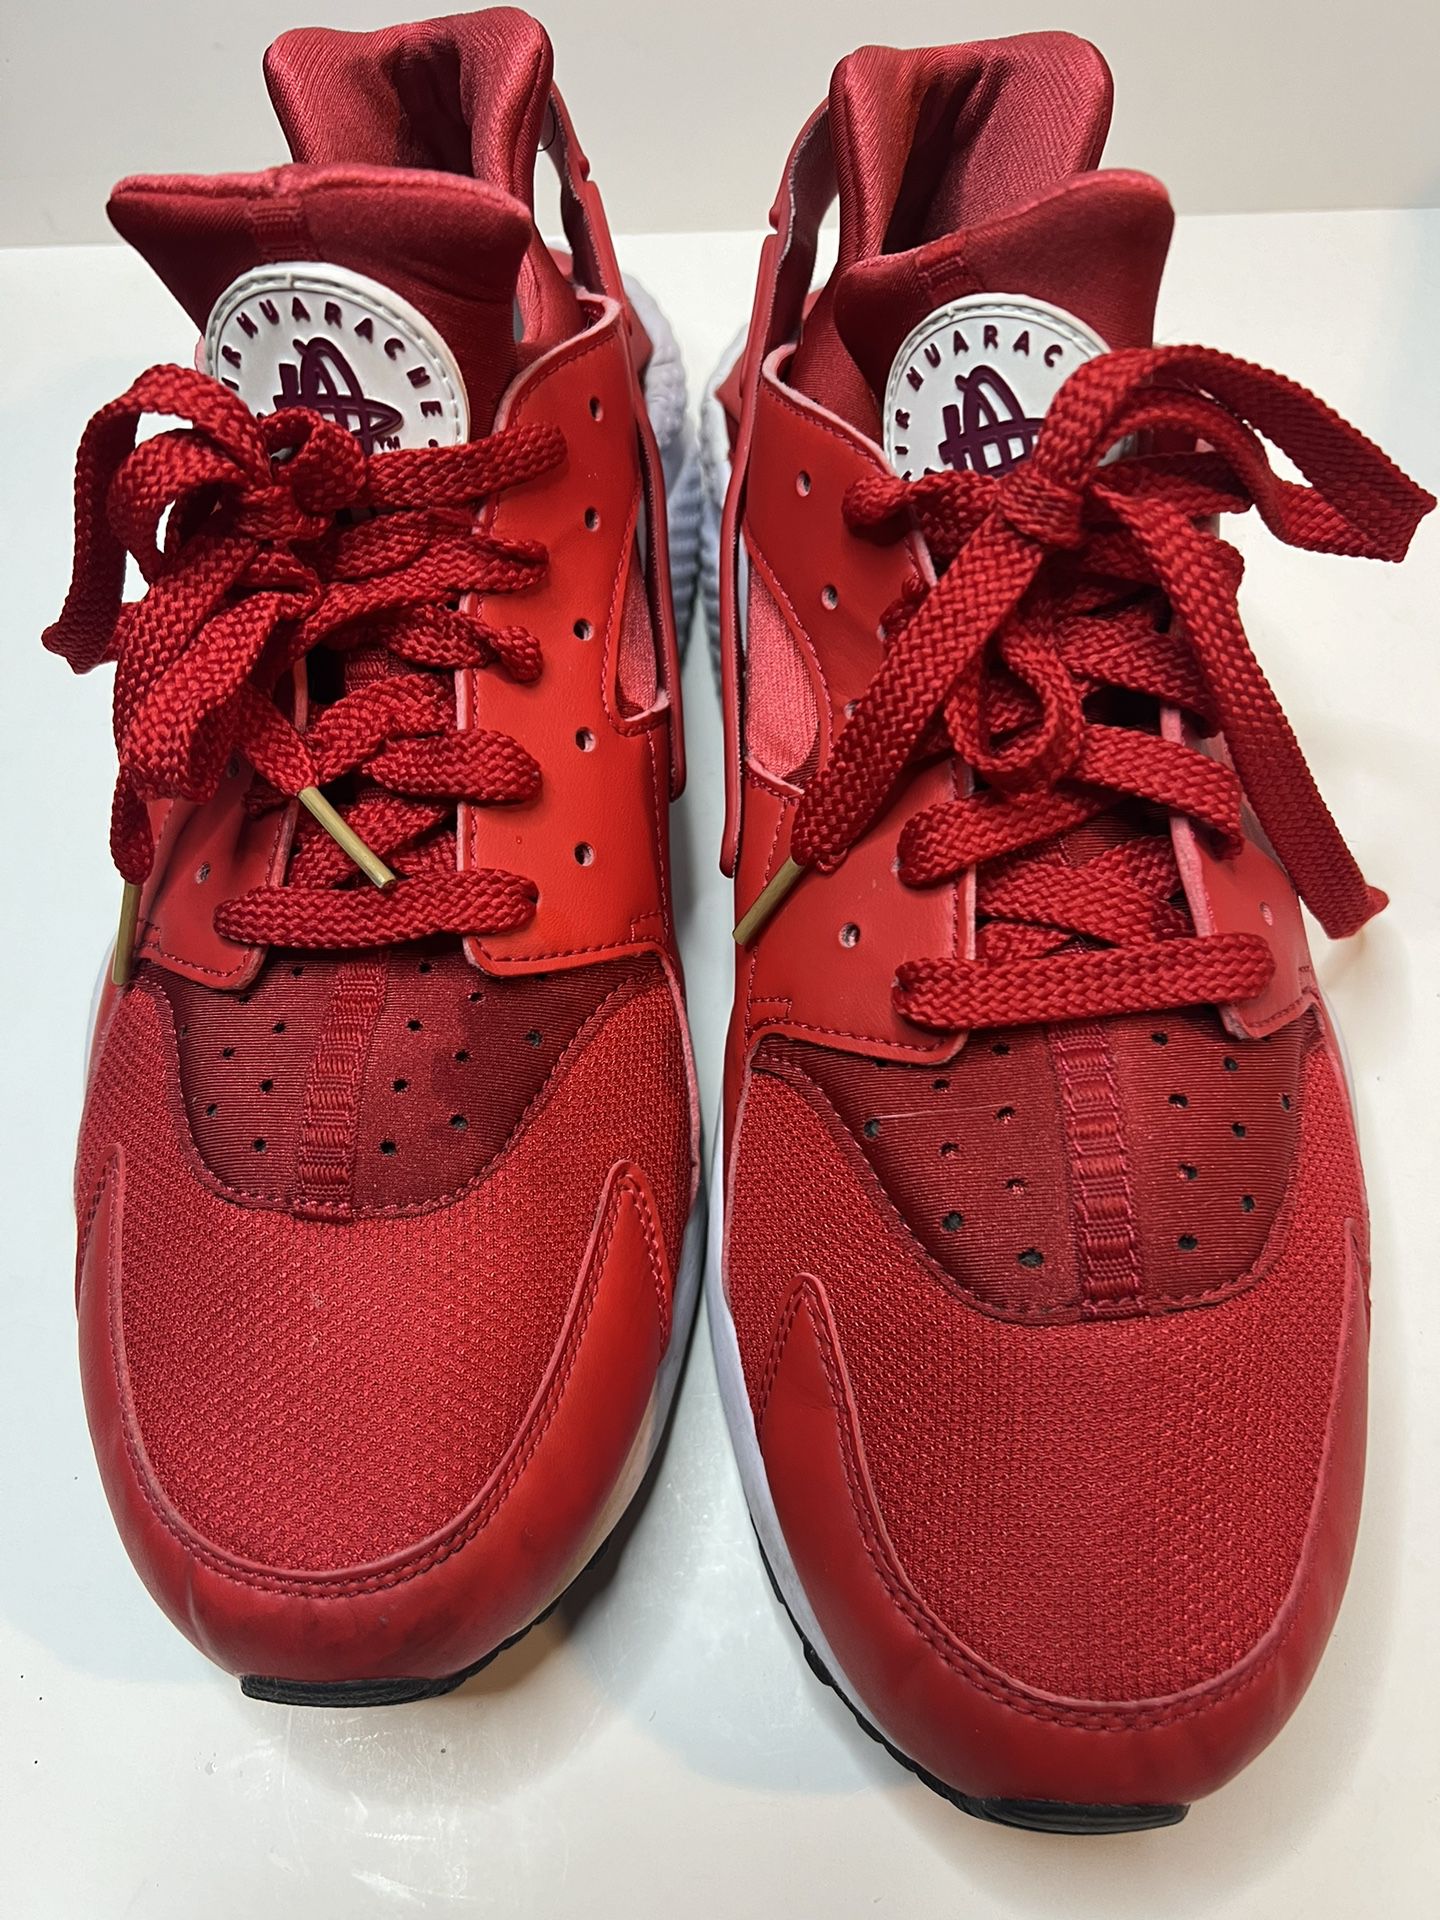 Nike Air Hurache University Red Running Shoes Size 12 318429 604 